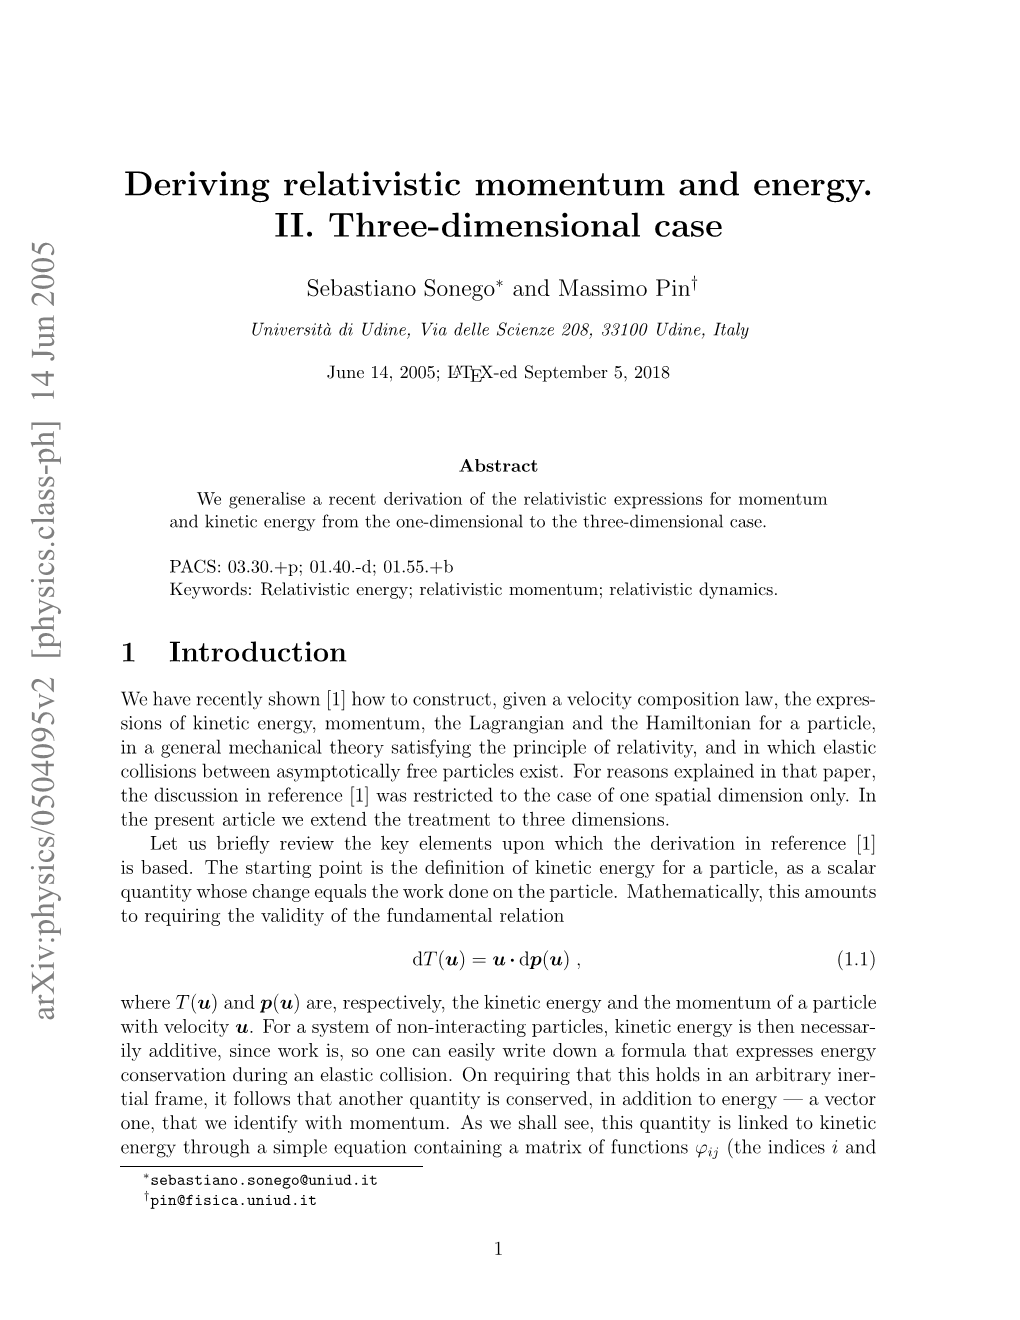 Deriving Relativistic Momentum and Energy. II. Three-Dimensional Case